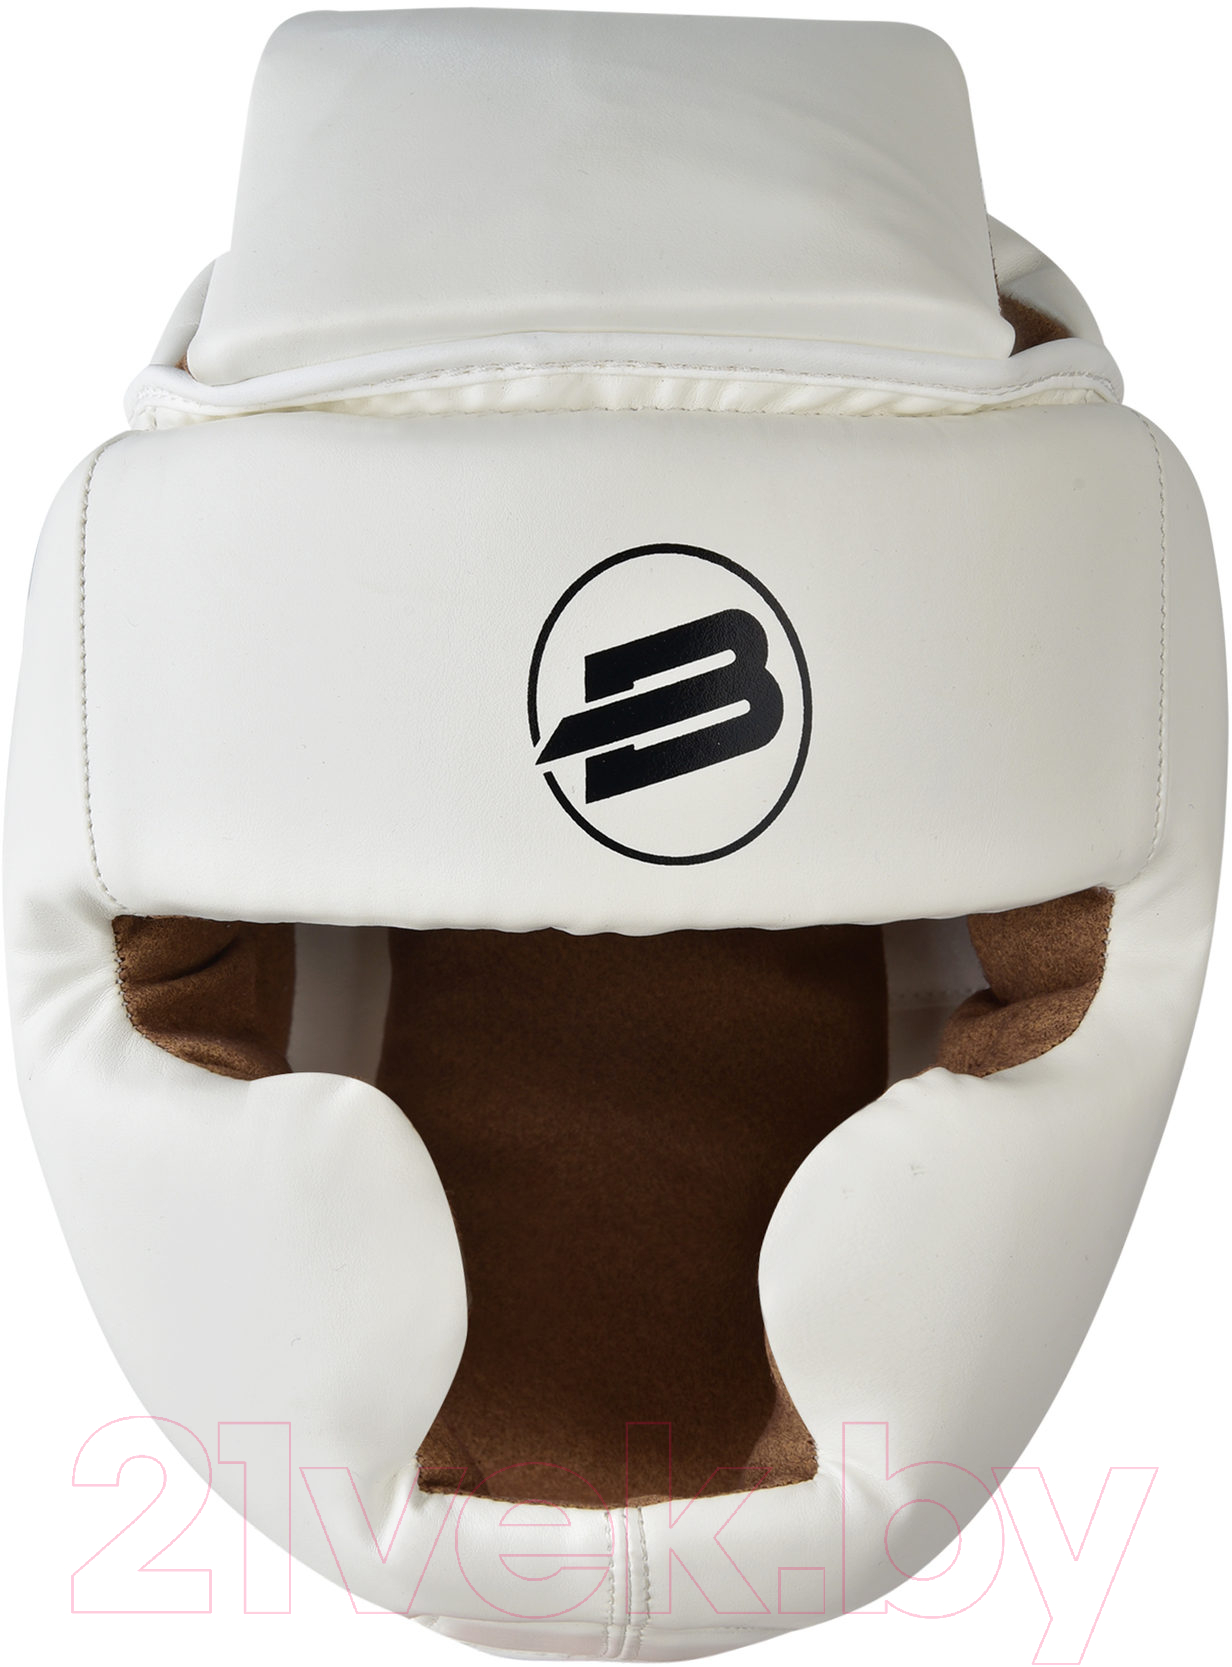 Шлем для карате BoyBo Белый